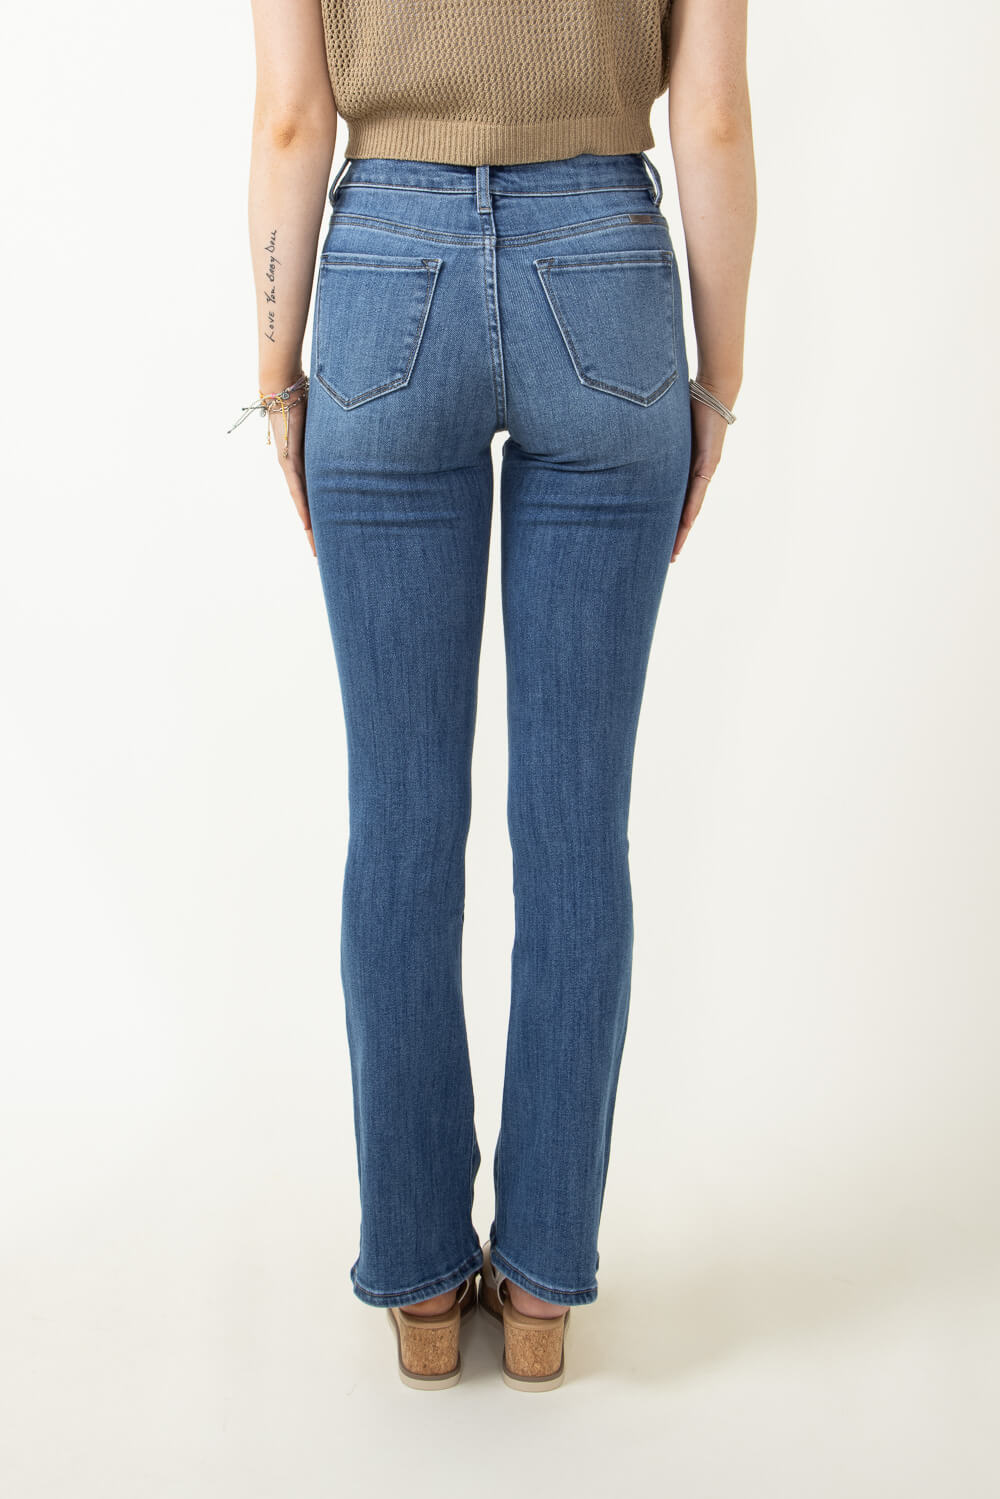 KanCan High Rise Bootcut Jeans for Women